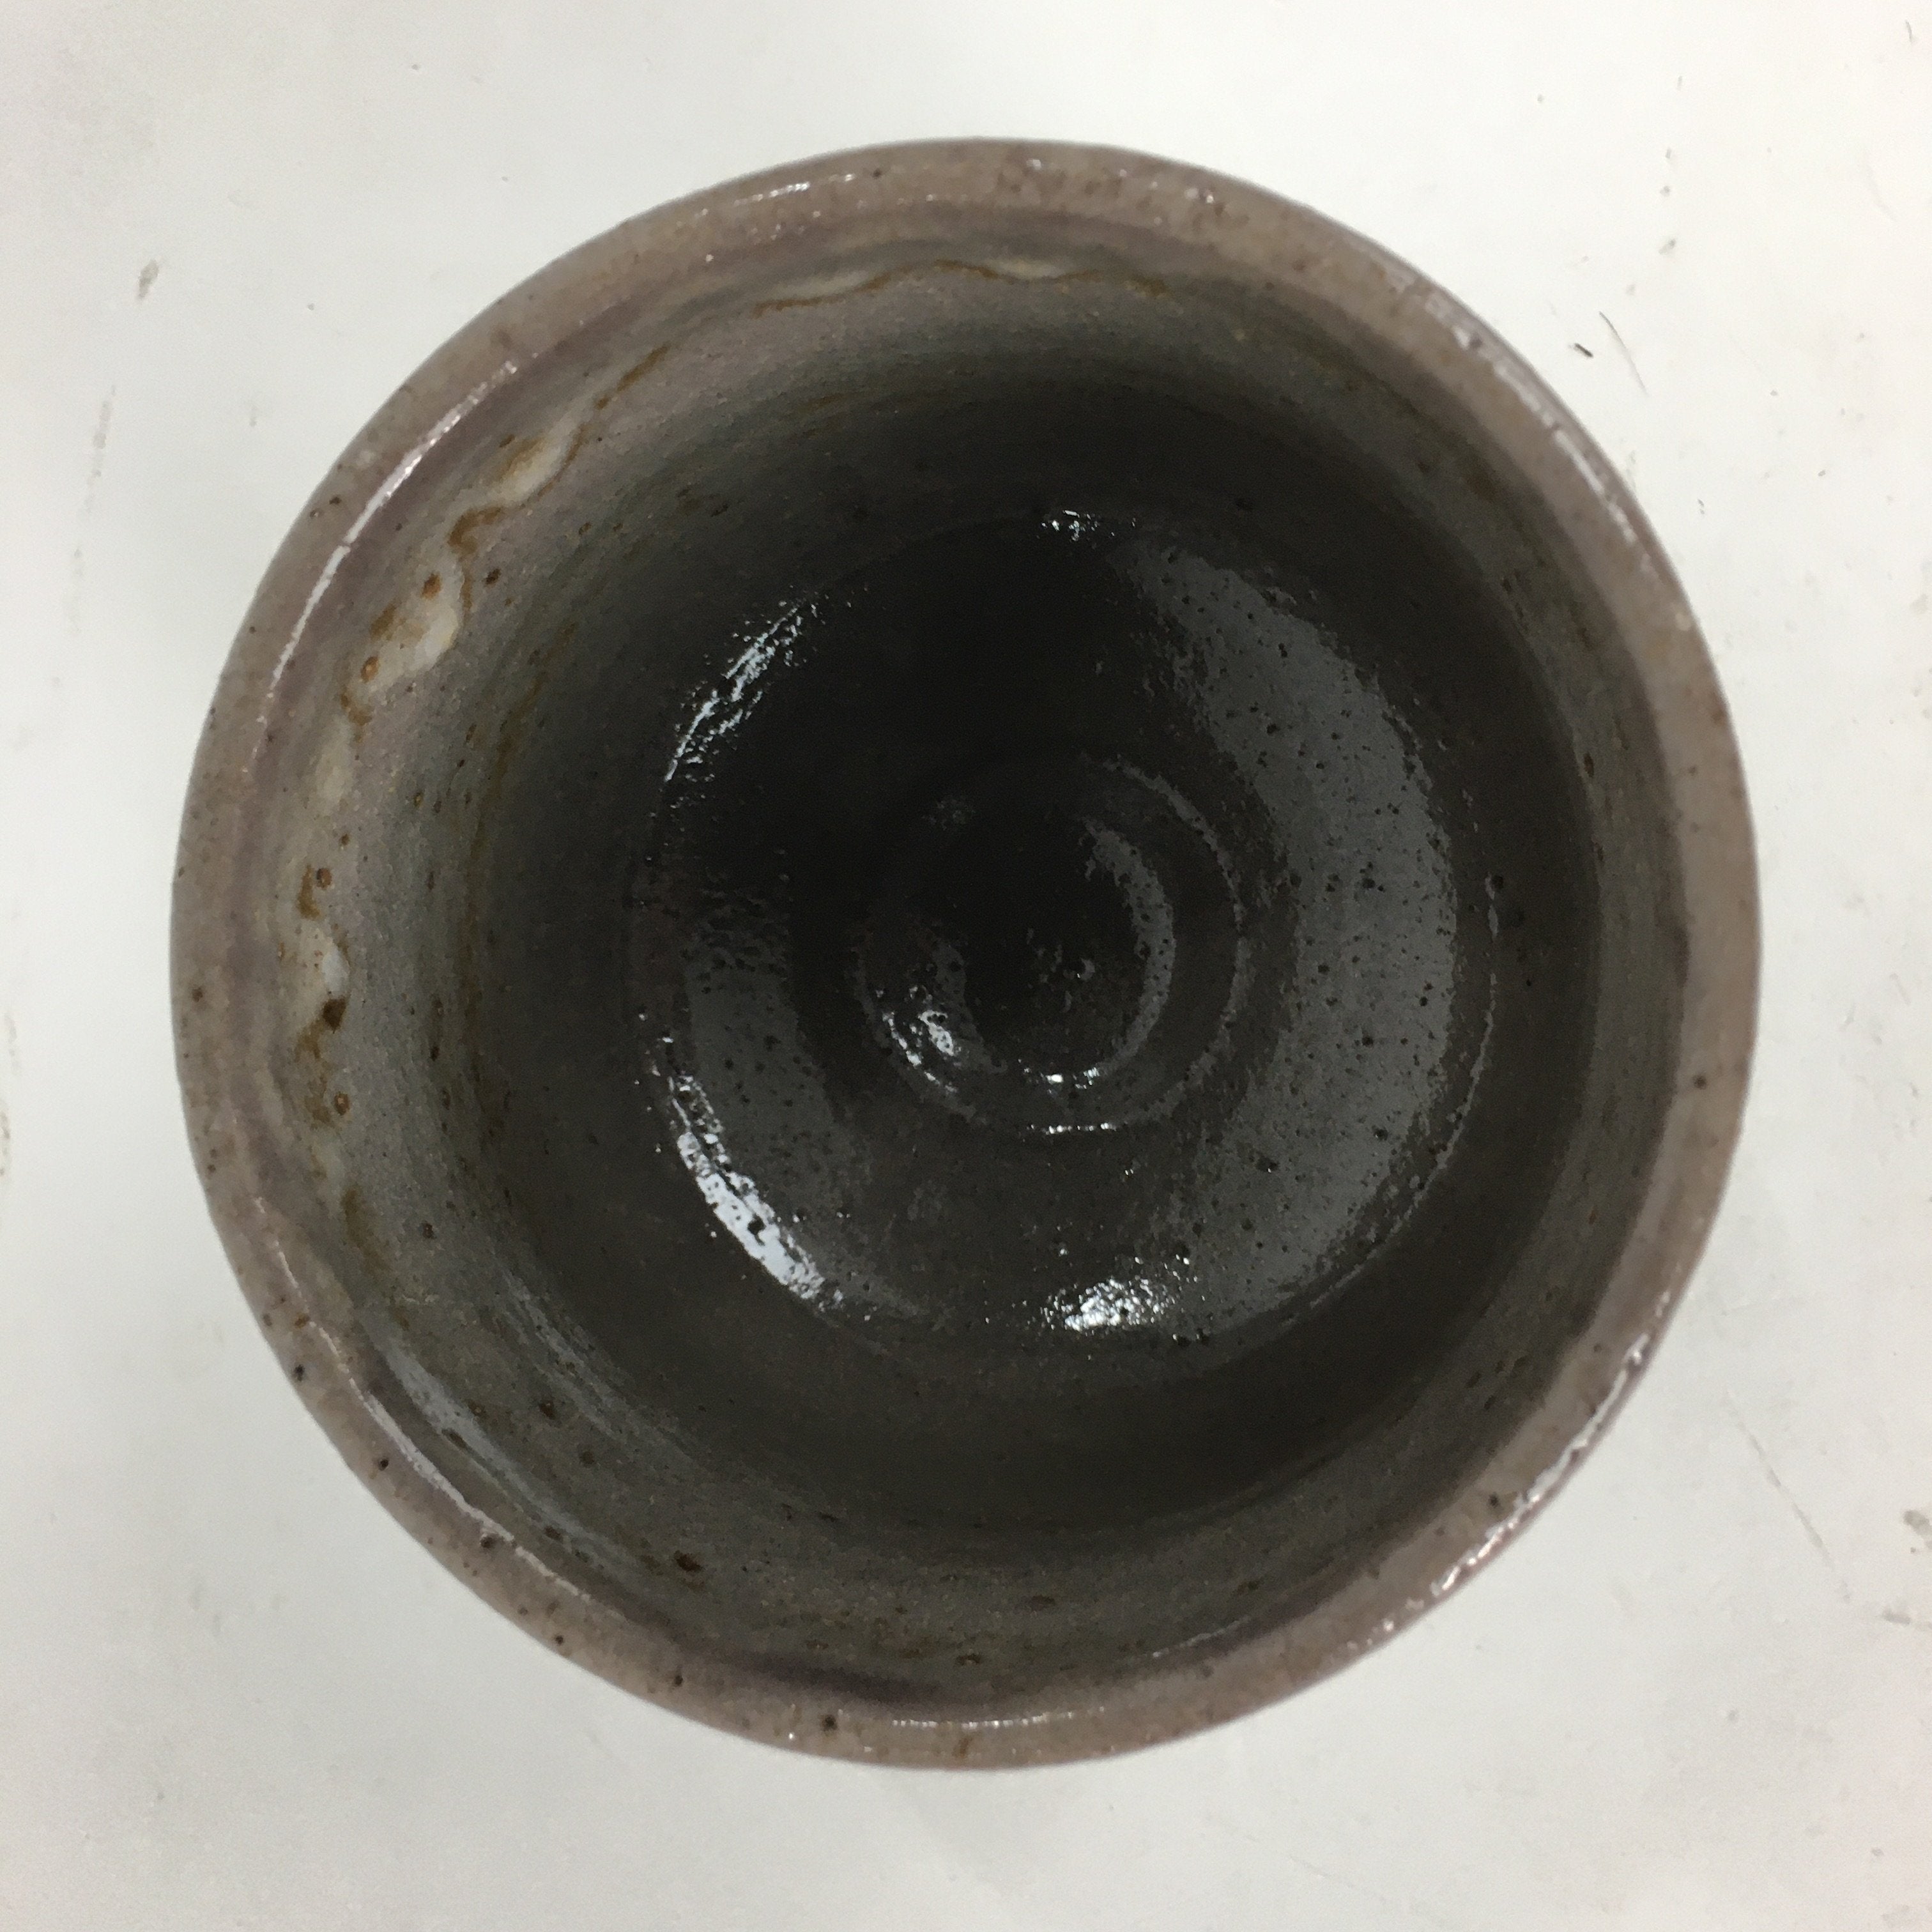 Japanese Ceramic Tea Ceremony Bowl Vtg Whitish Brown Cylinder Type Chawan GTB745